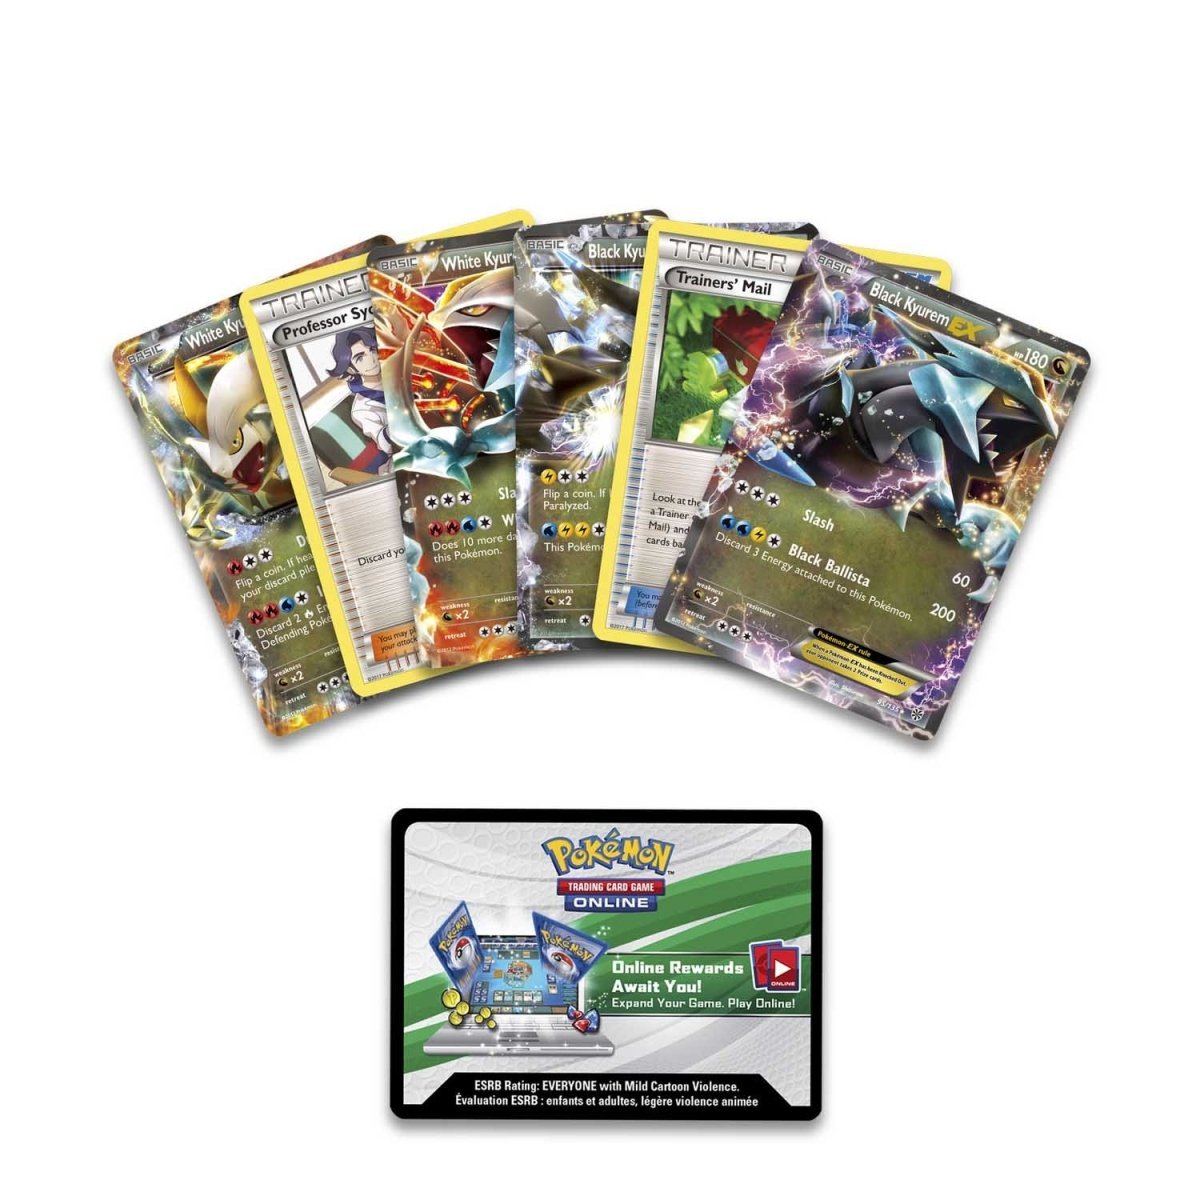 Pokémon TCG: Battle Arena Decks (Black Kyurem vs. White Kyurem) - PokeRvmTheme Deck